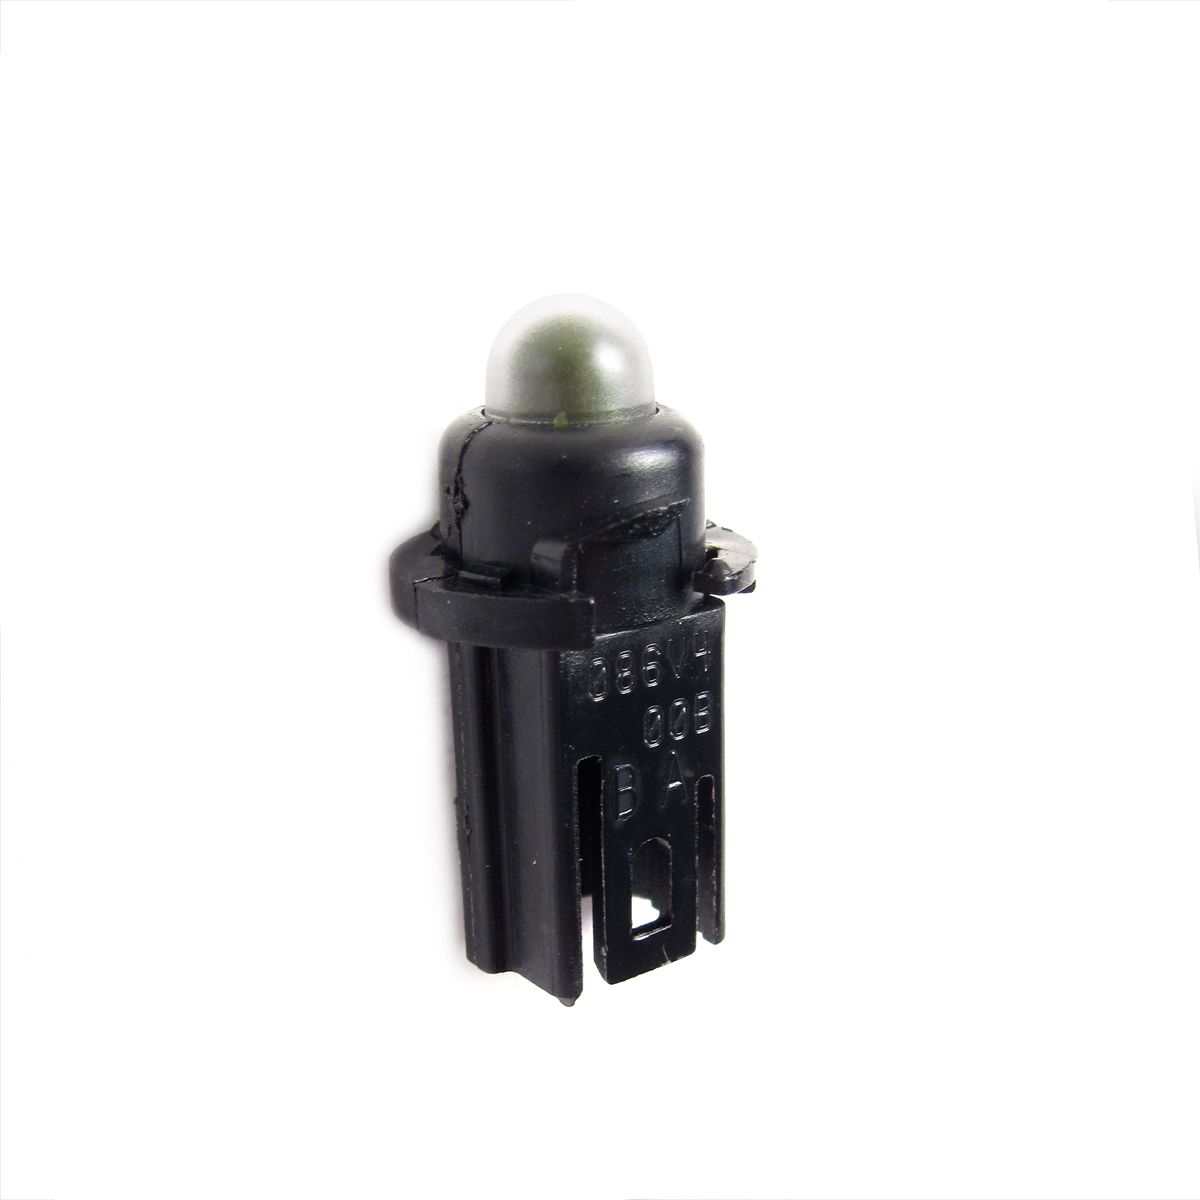 Corvette Headlight / Fog Lamp / Turn Signal / Ambient Light Sensor